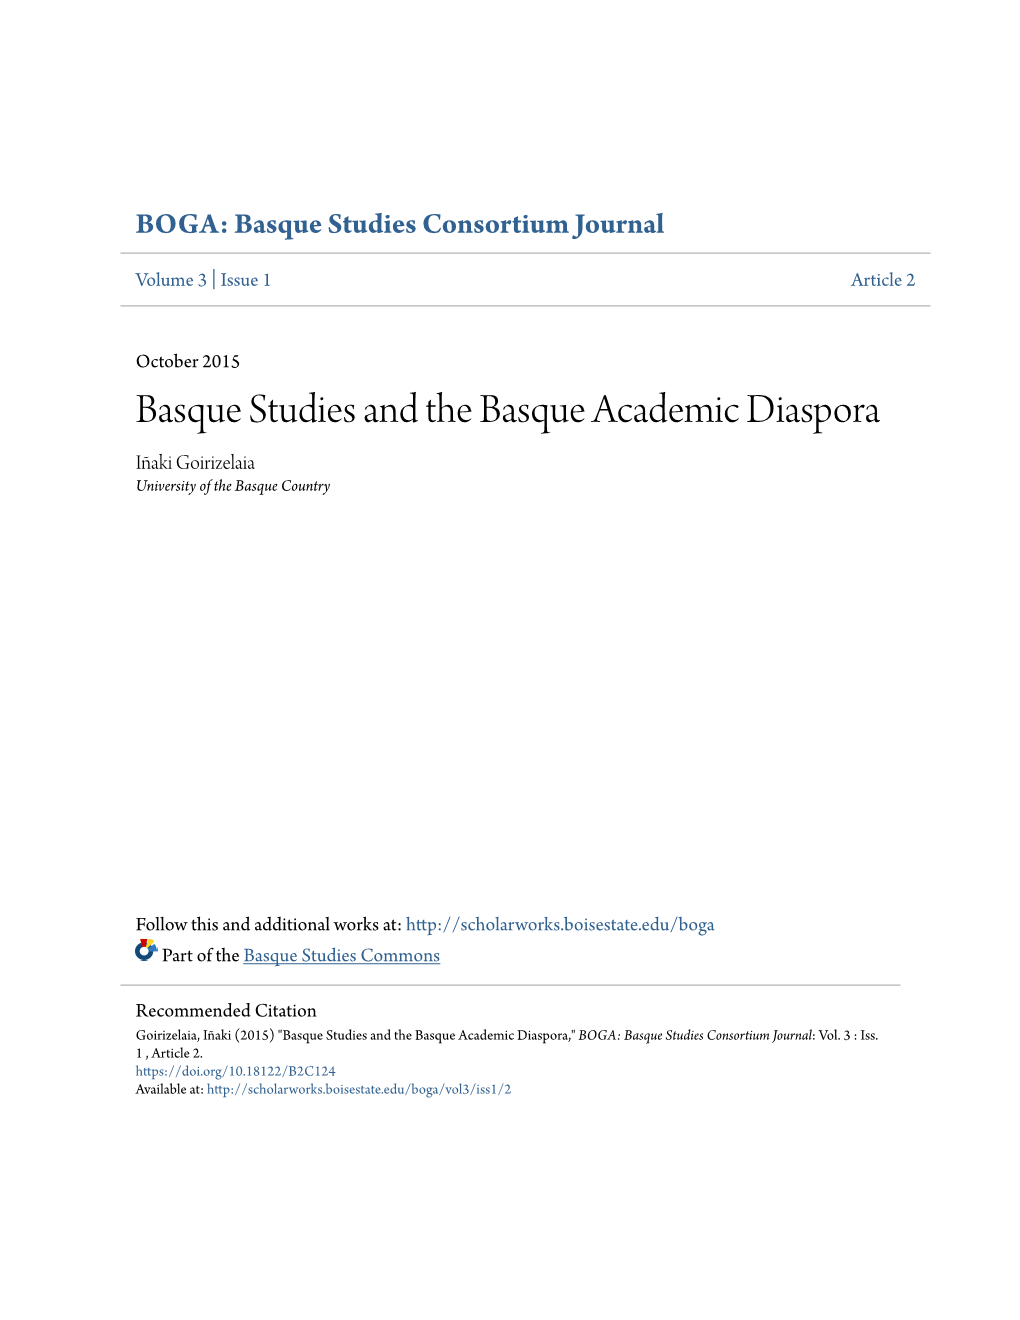 Basque Studies and the Basque Academic Diaspora Iñaki Goirizelaia University of the Basque Country